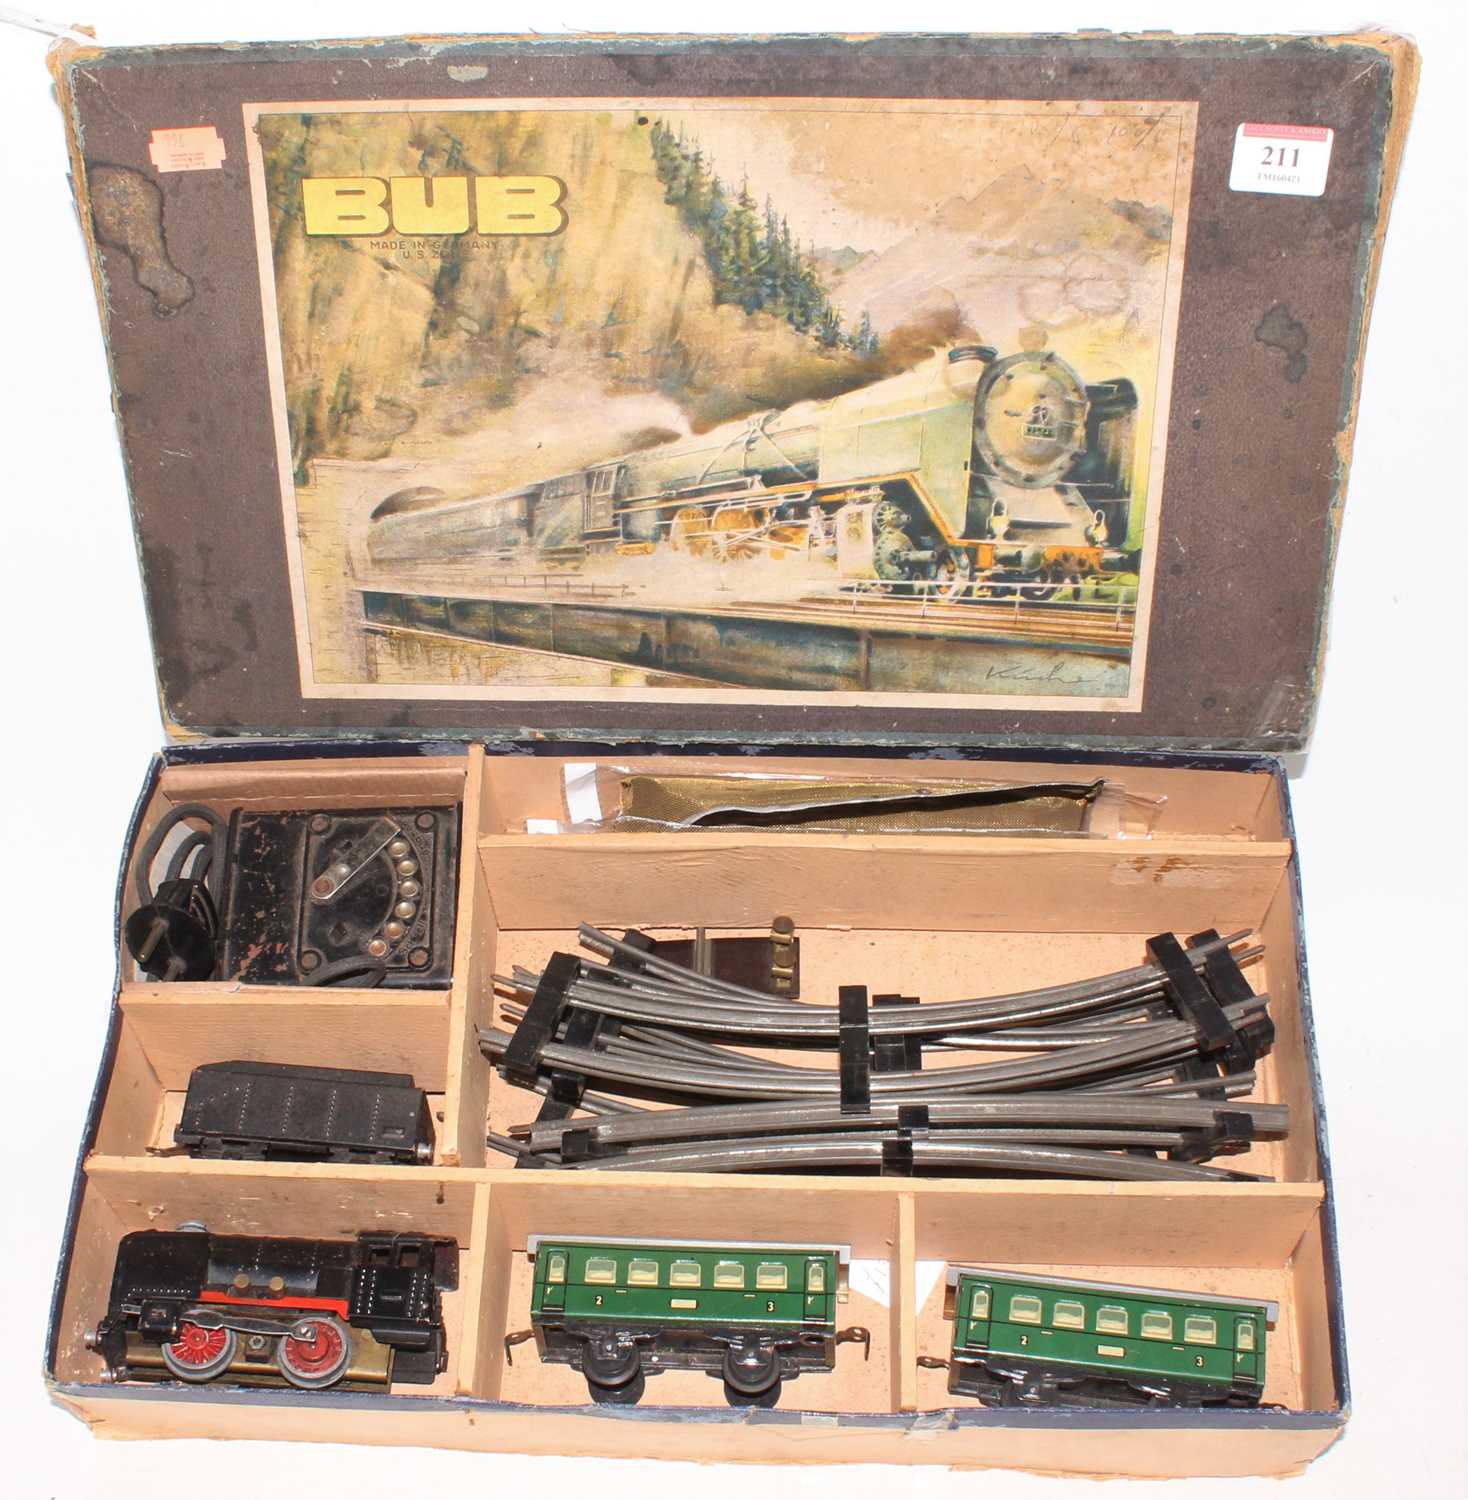 Lot 211 - Karl Bub electric train set comprising 0-4-0...